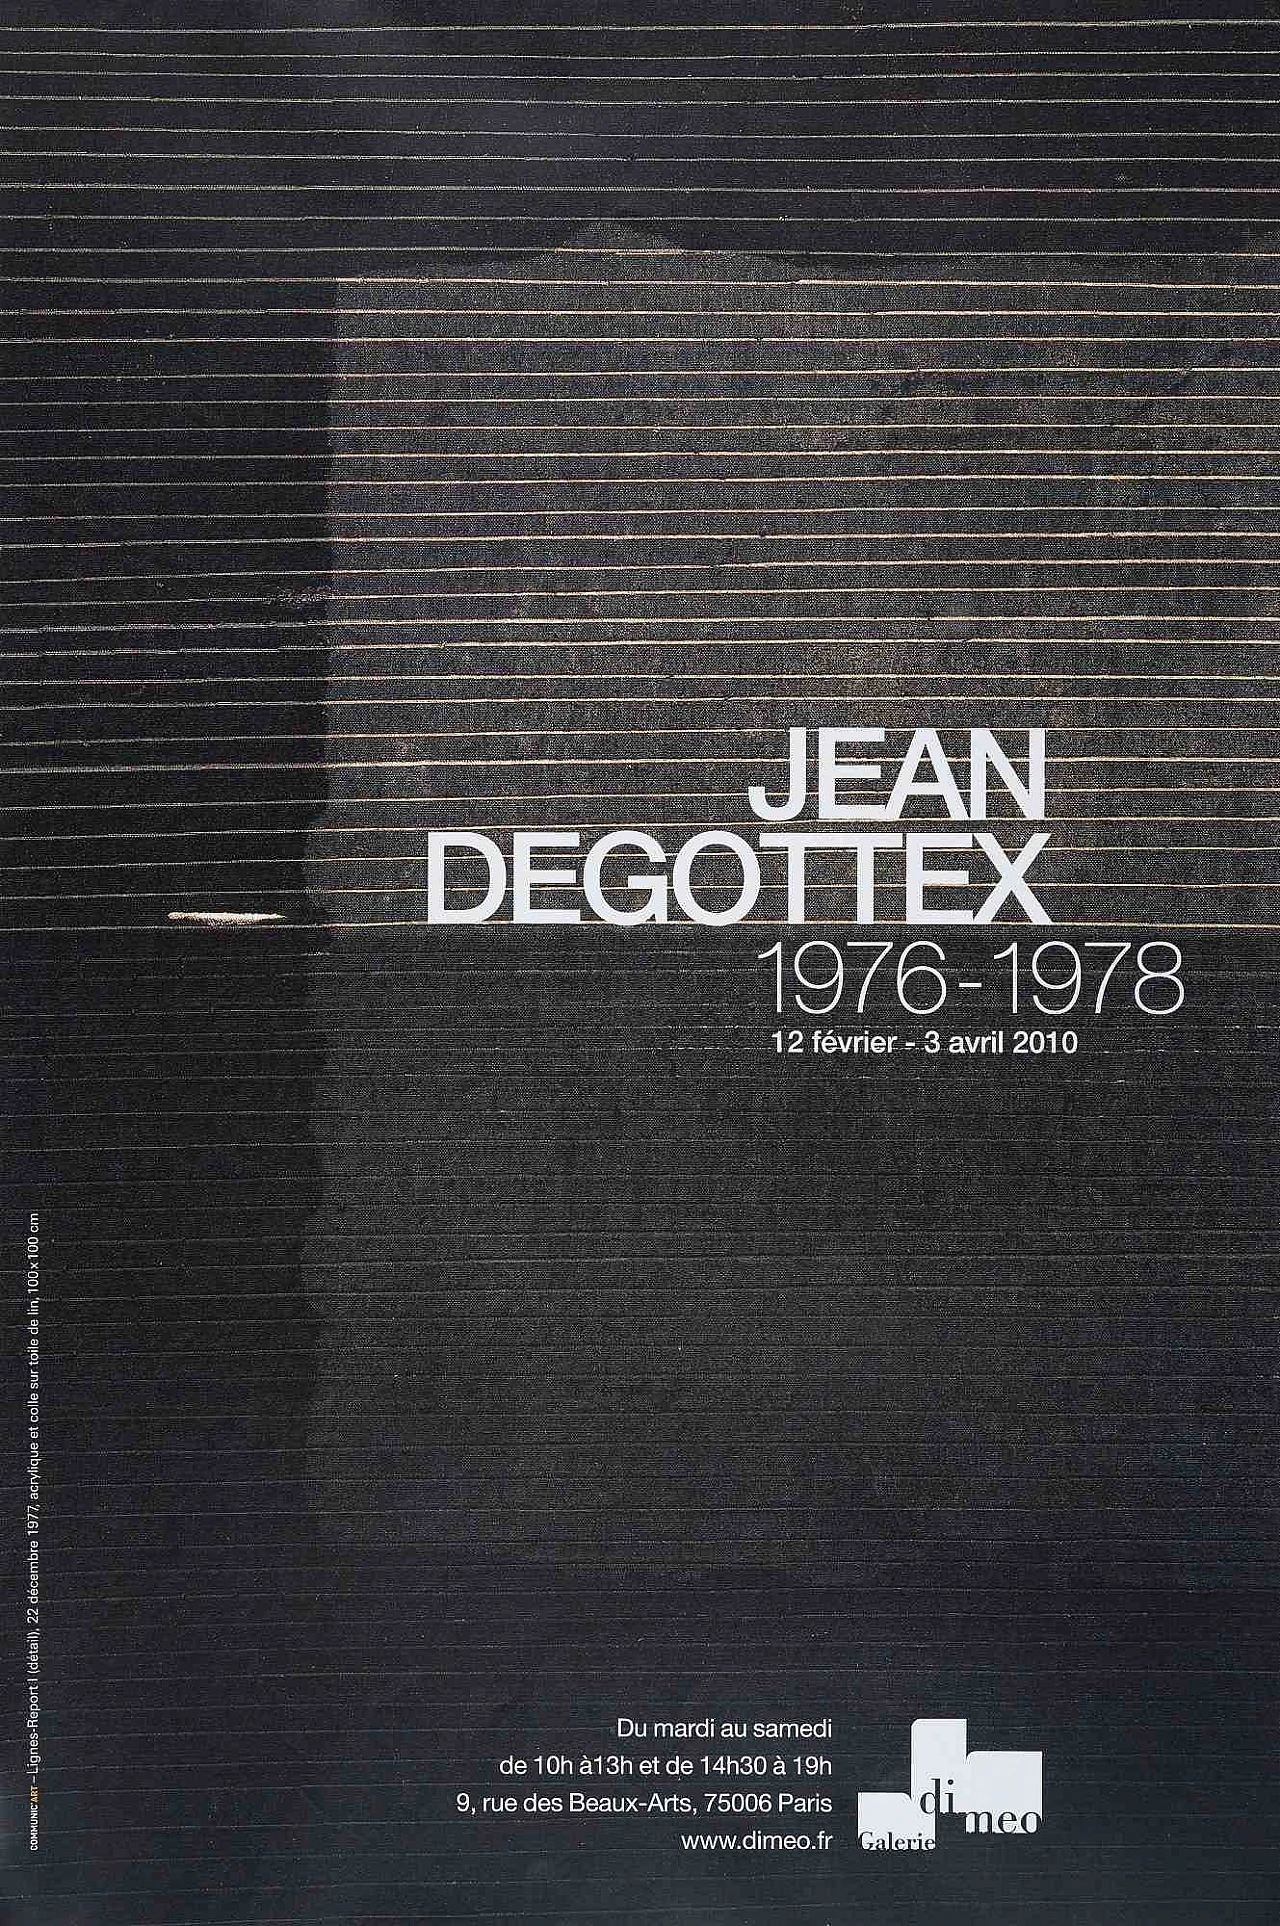 Jean Degottex, Vintage Poster Exhibition 2000s 1